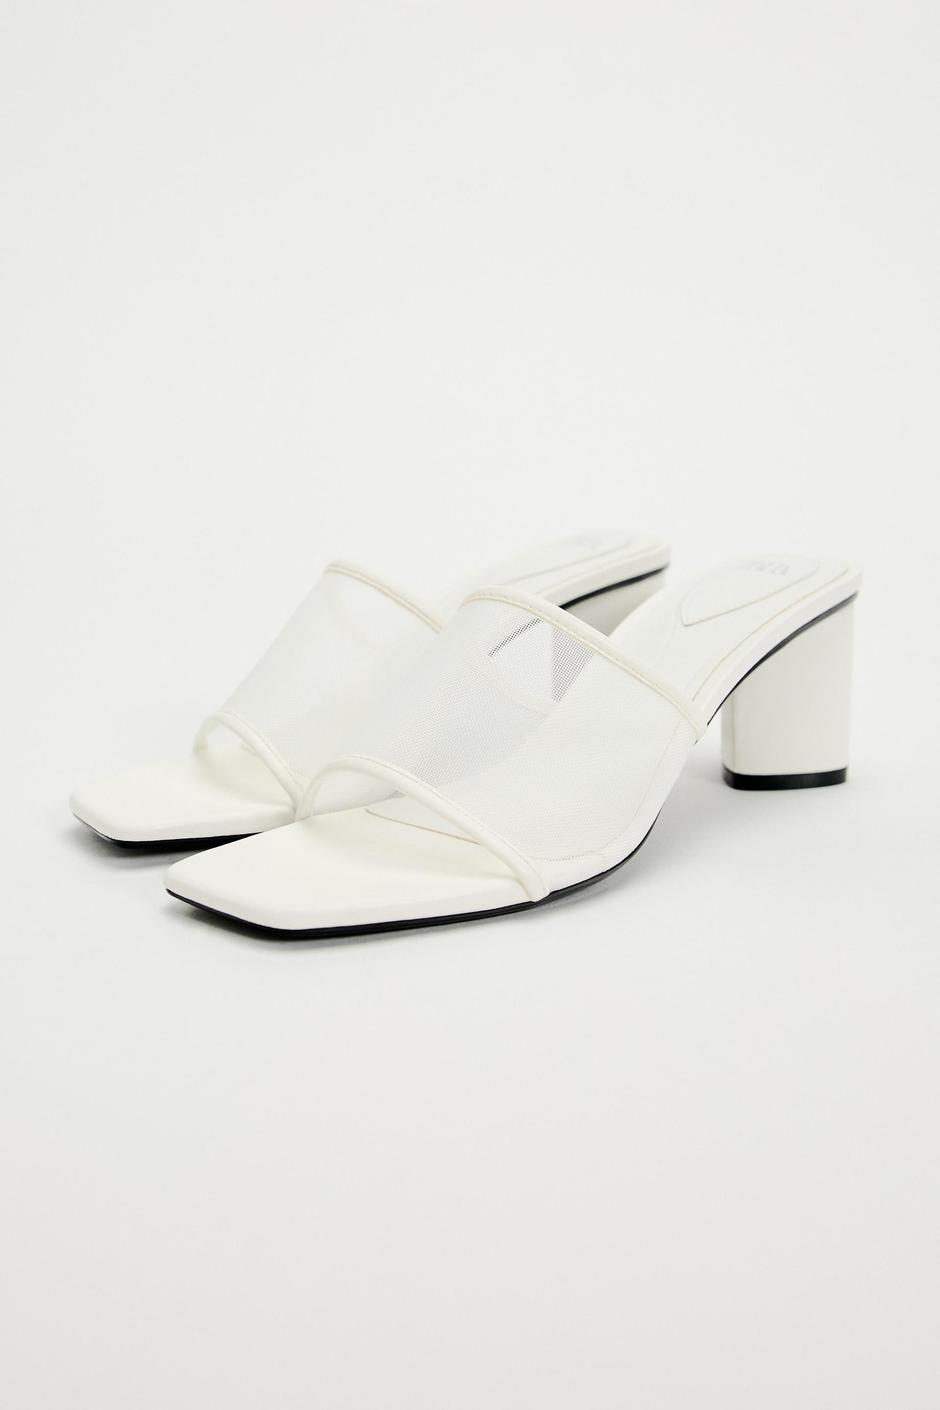 Zara sandale | Autor: Zara